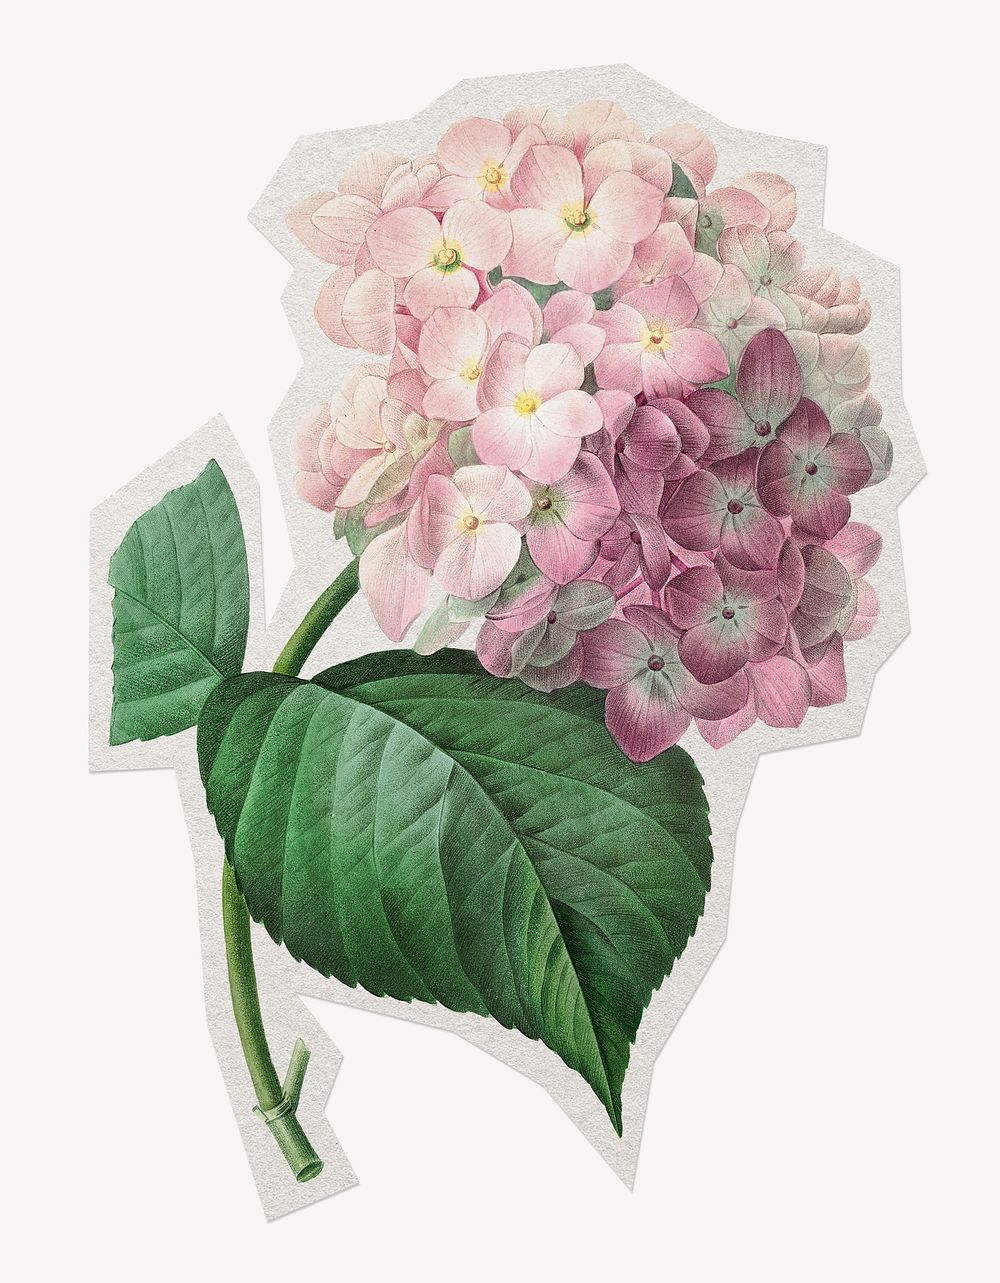 Hydrangea flower paper element with white border